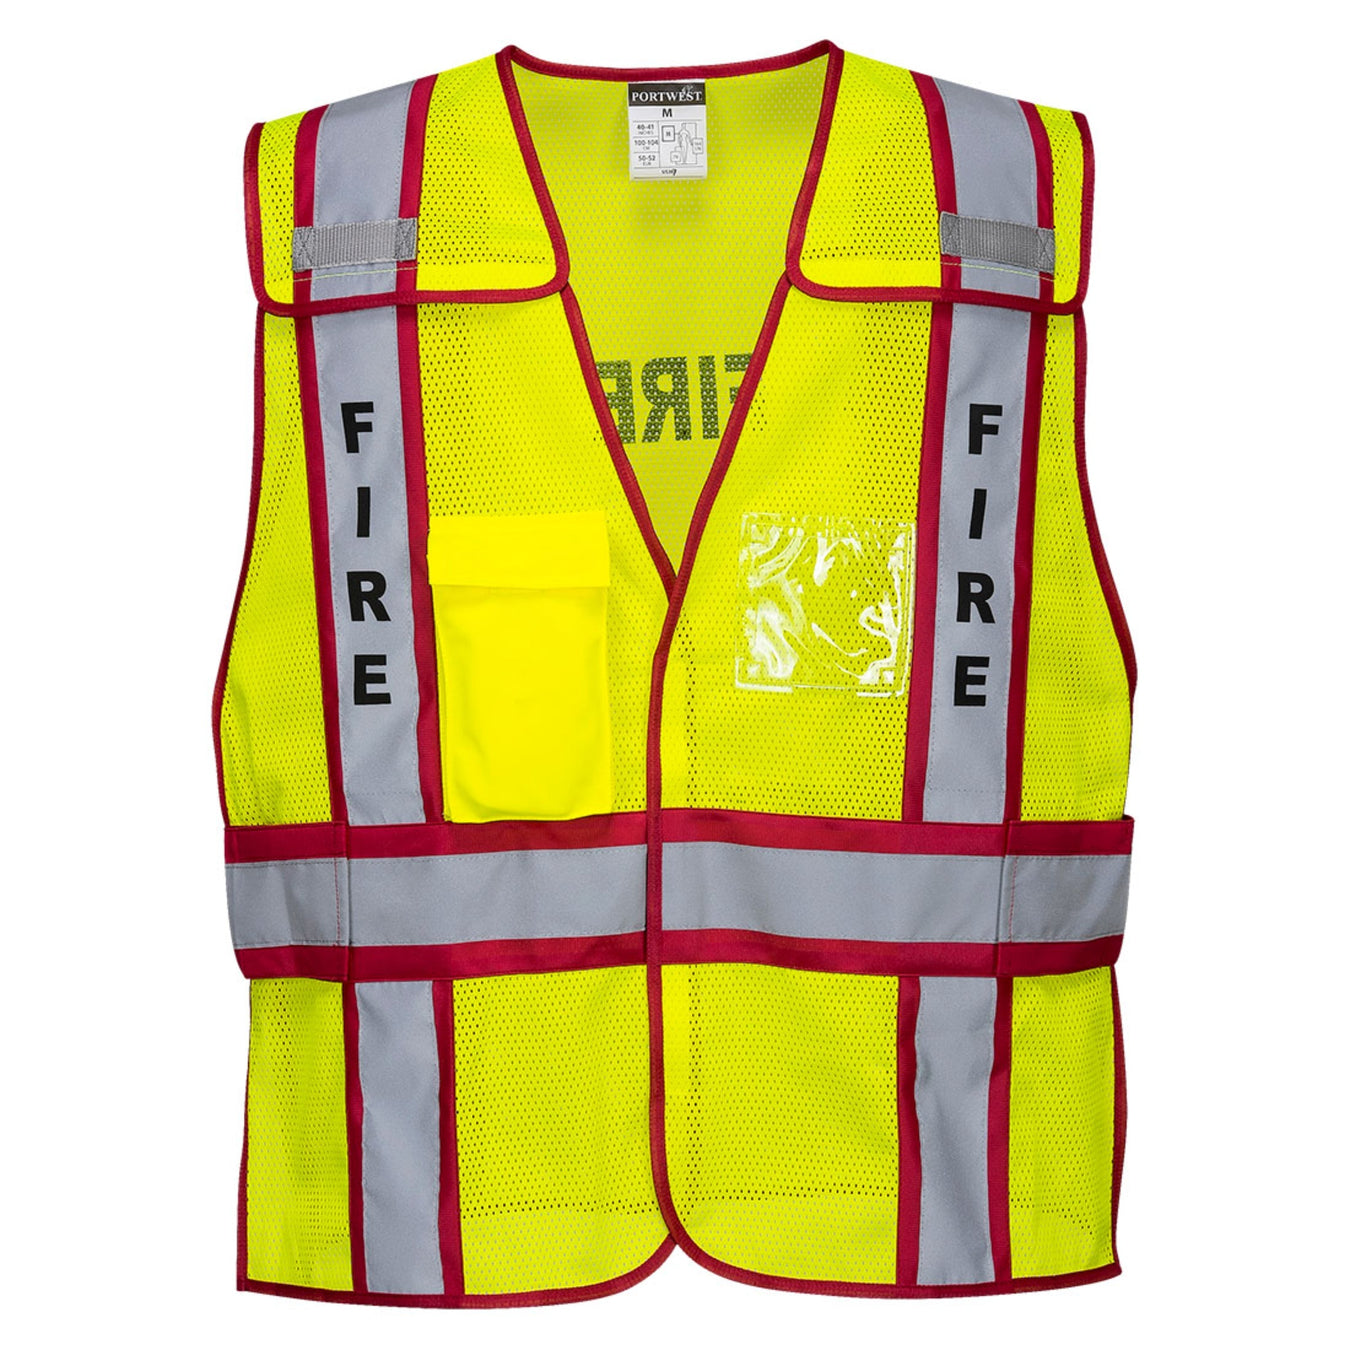 Public Safety Vests: Police, Fire. EMS